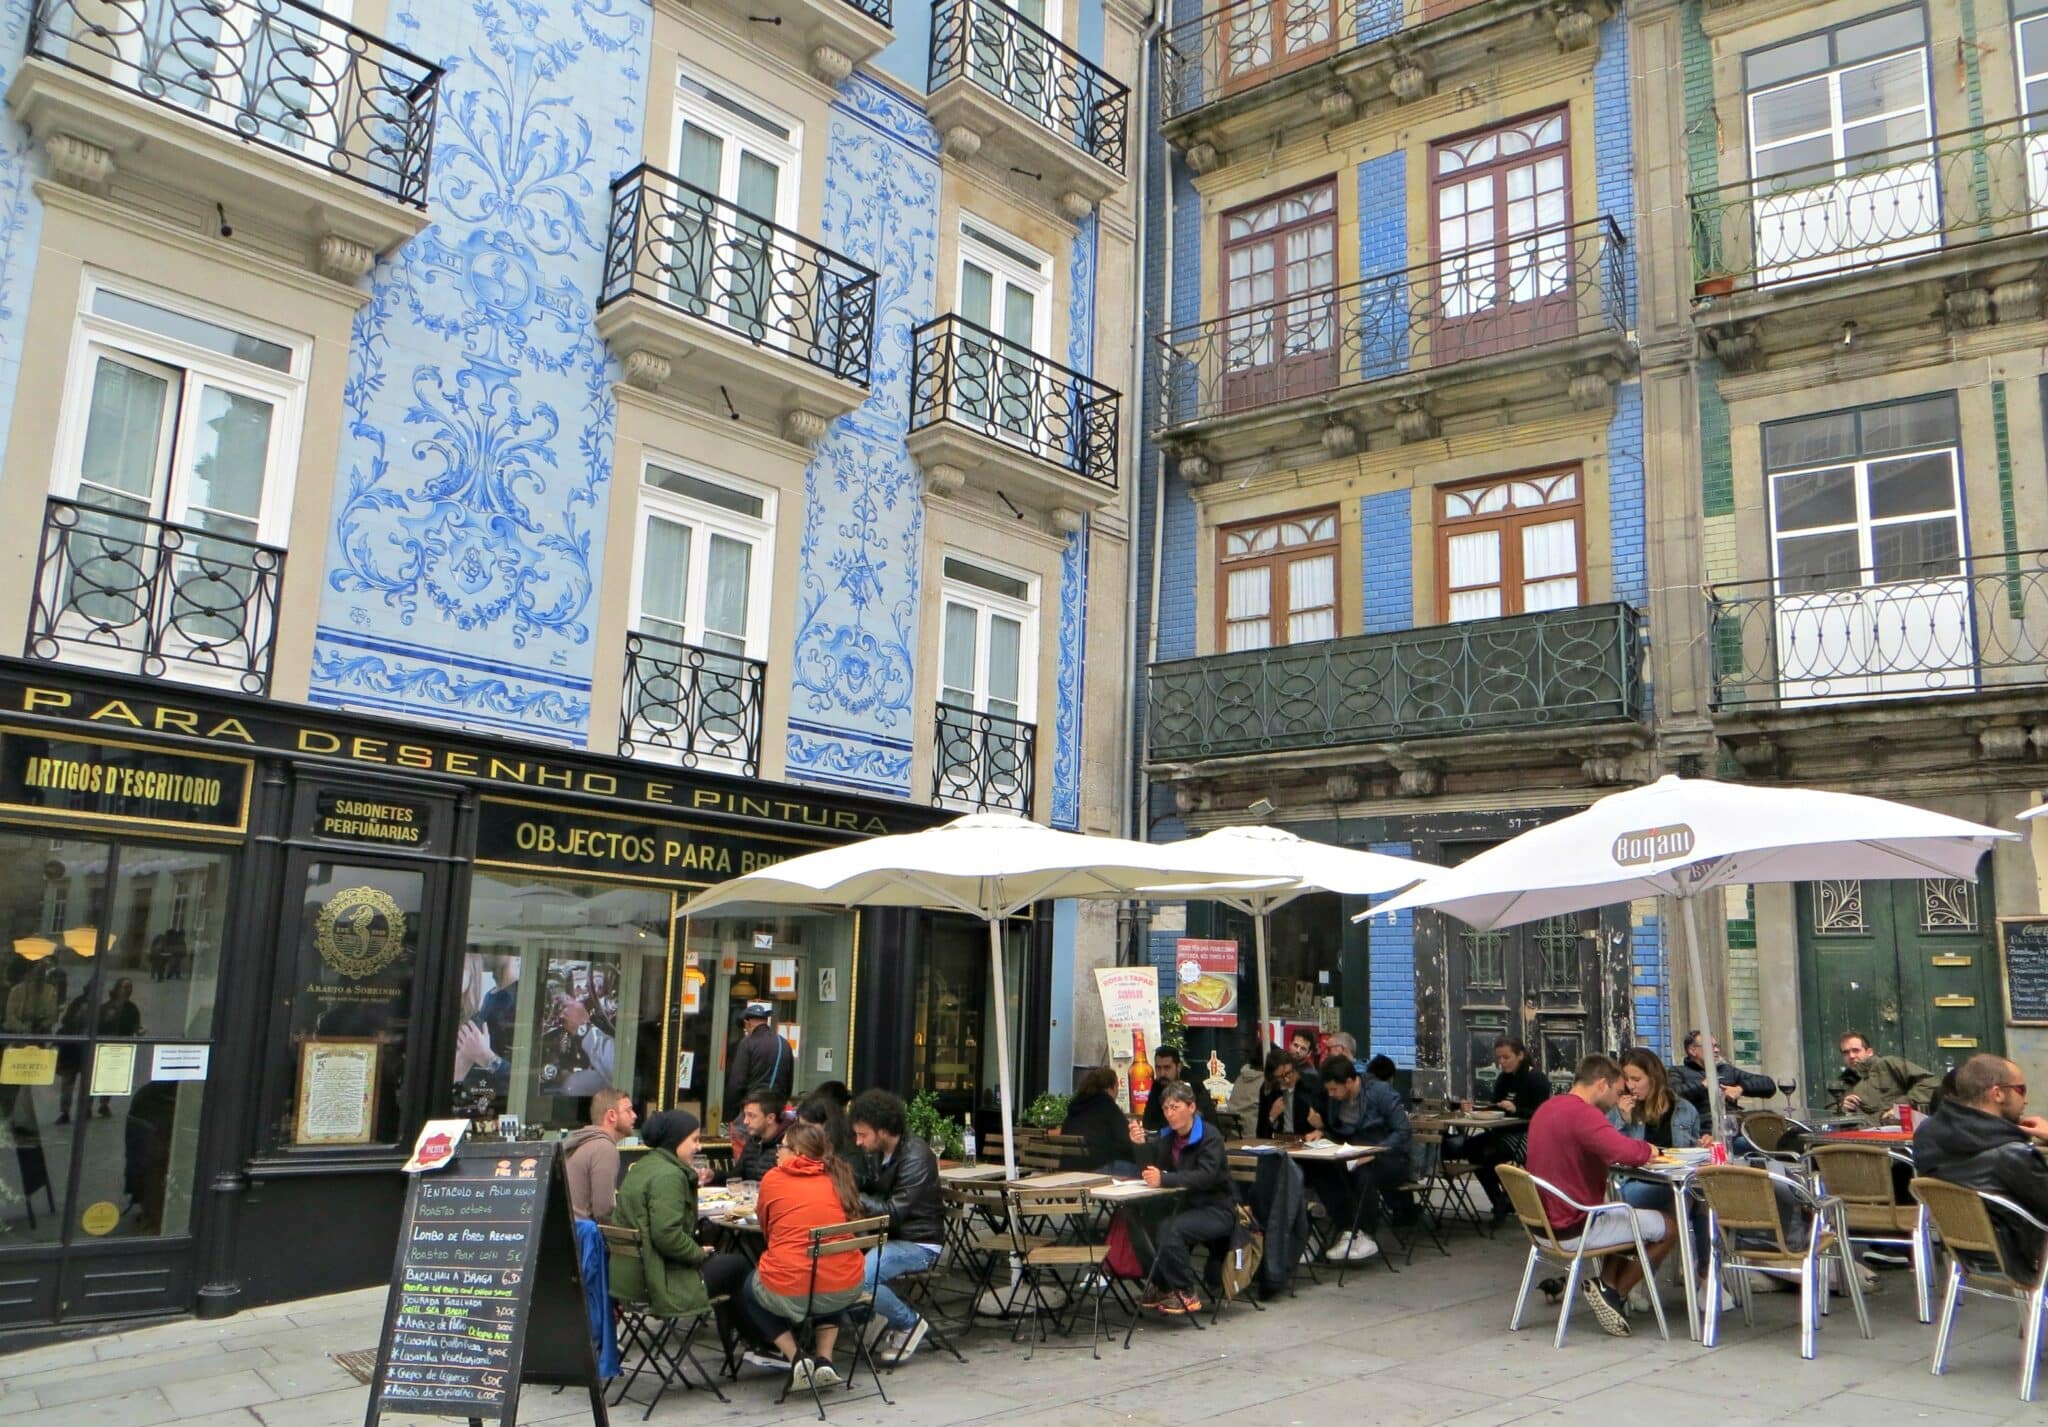 Classic Porto courtyard